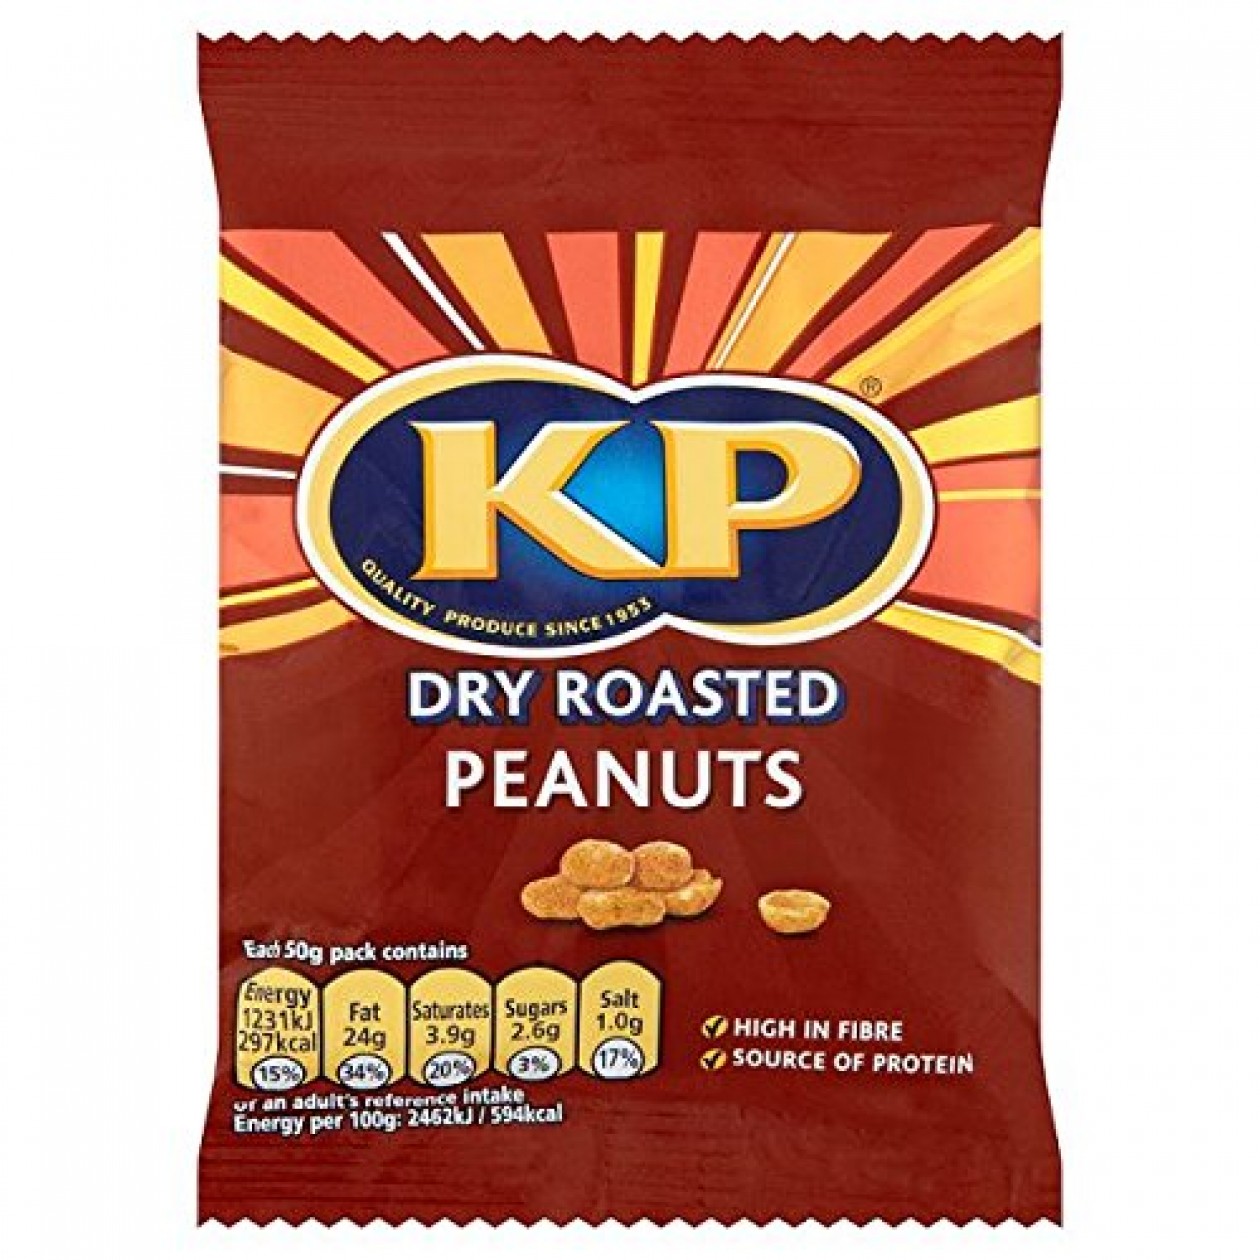 KP Dry Roasted Peanuts 50g (Pack of 21)